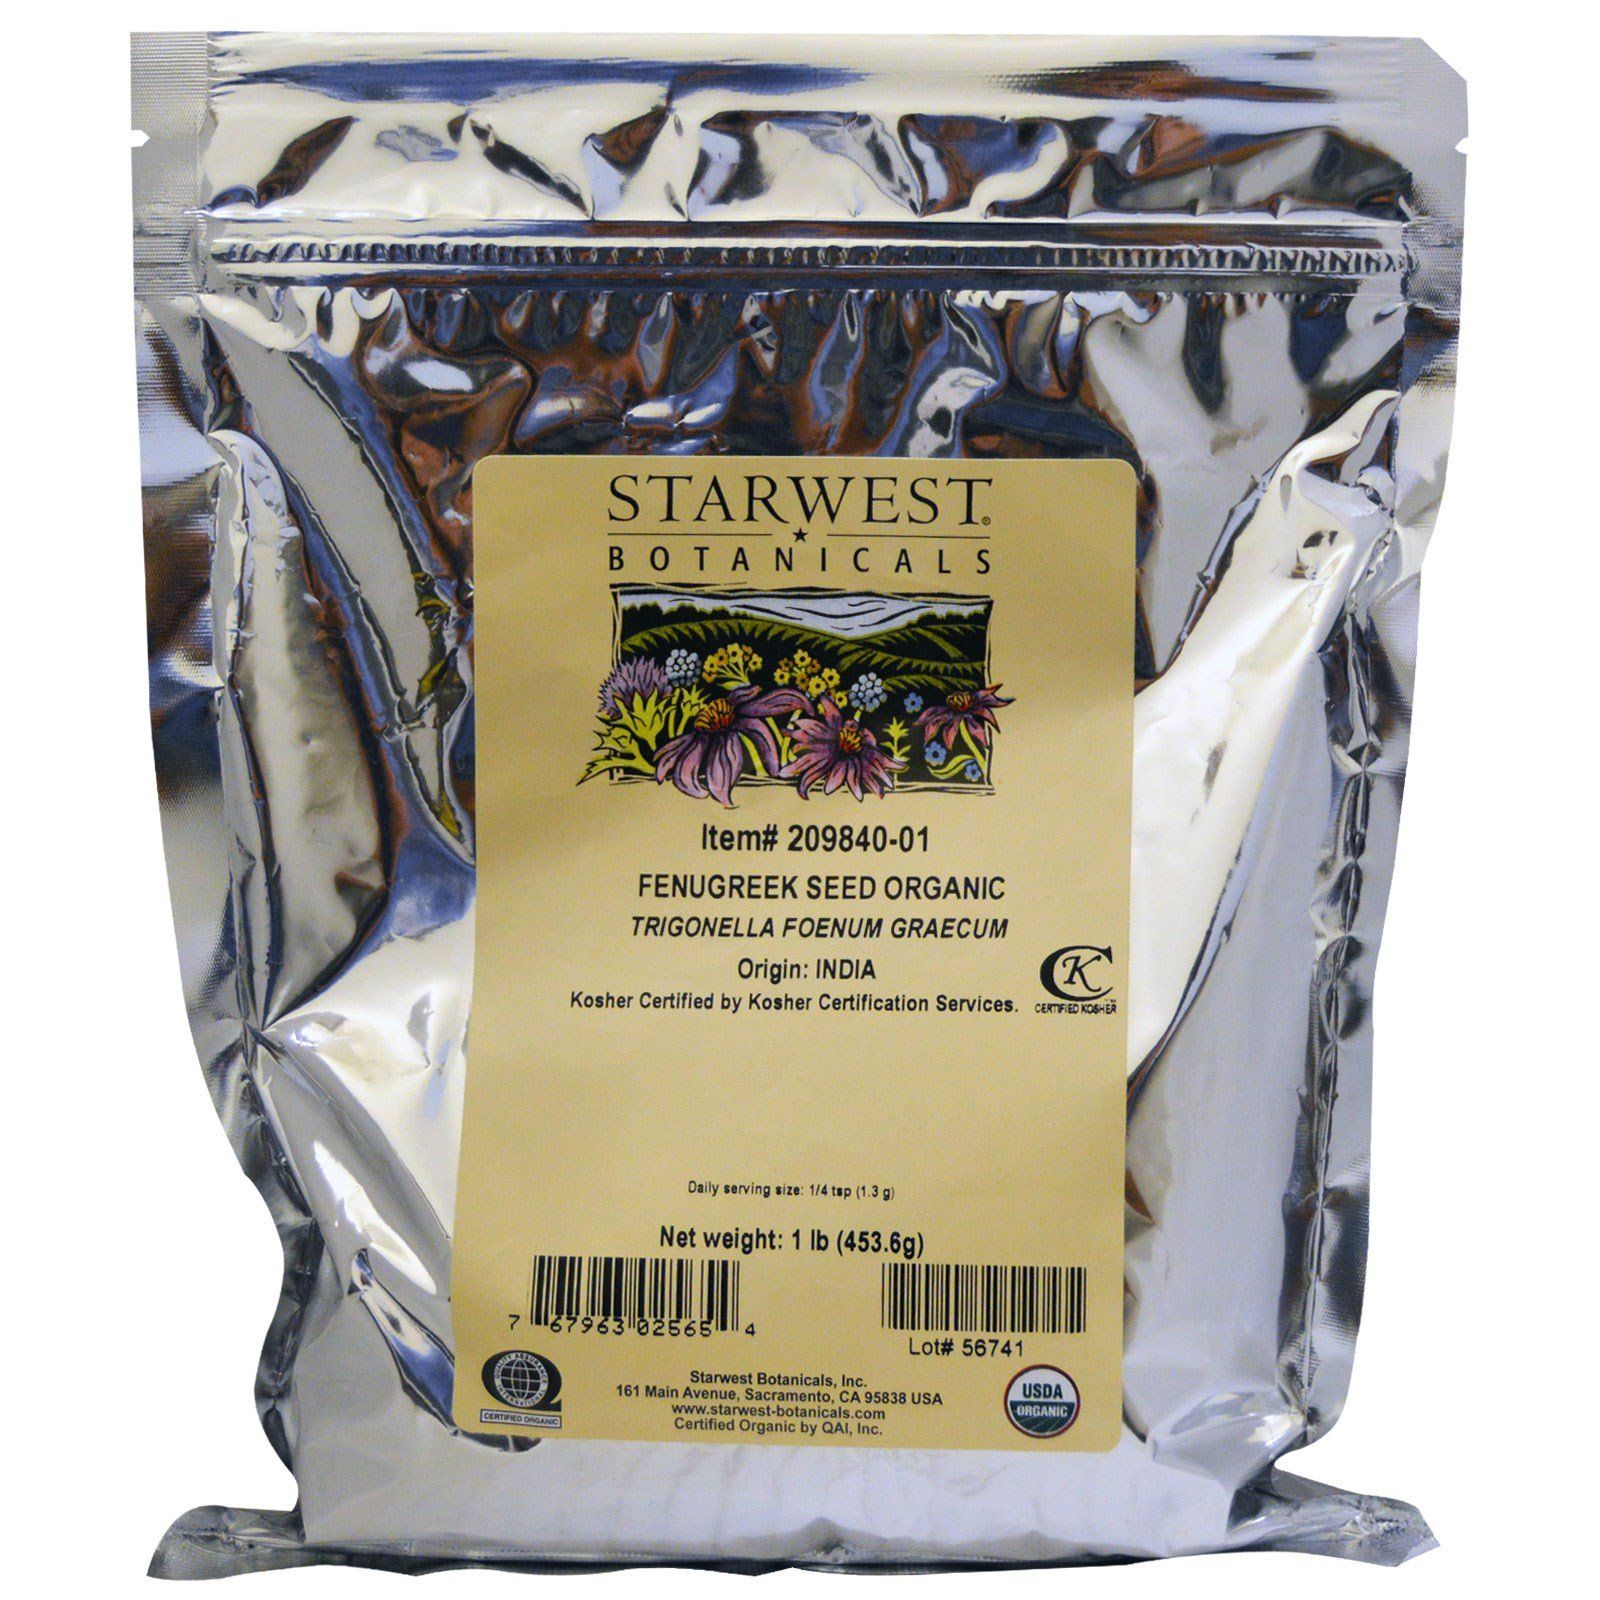 Starwest Botanicals Натуральные семена пажитника,1 фунт (453.6 г) starwest botanicals семена органического коричневого льна 453 6 г 1 фунт